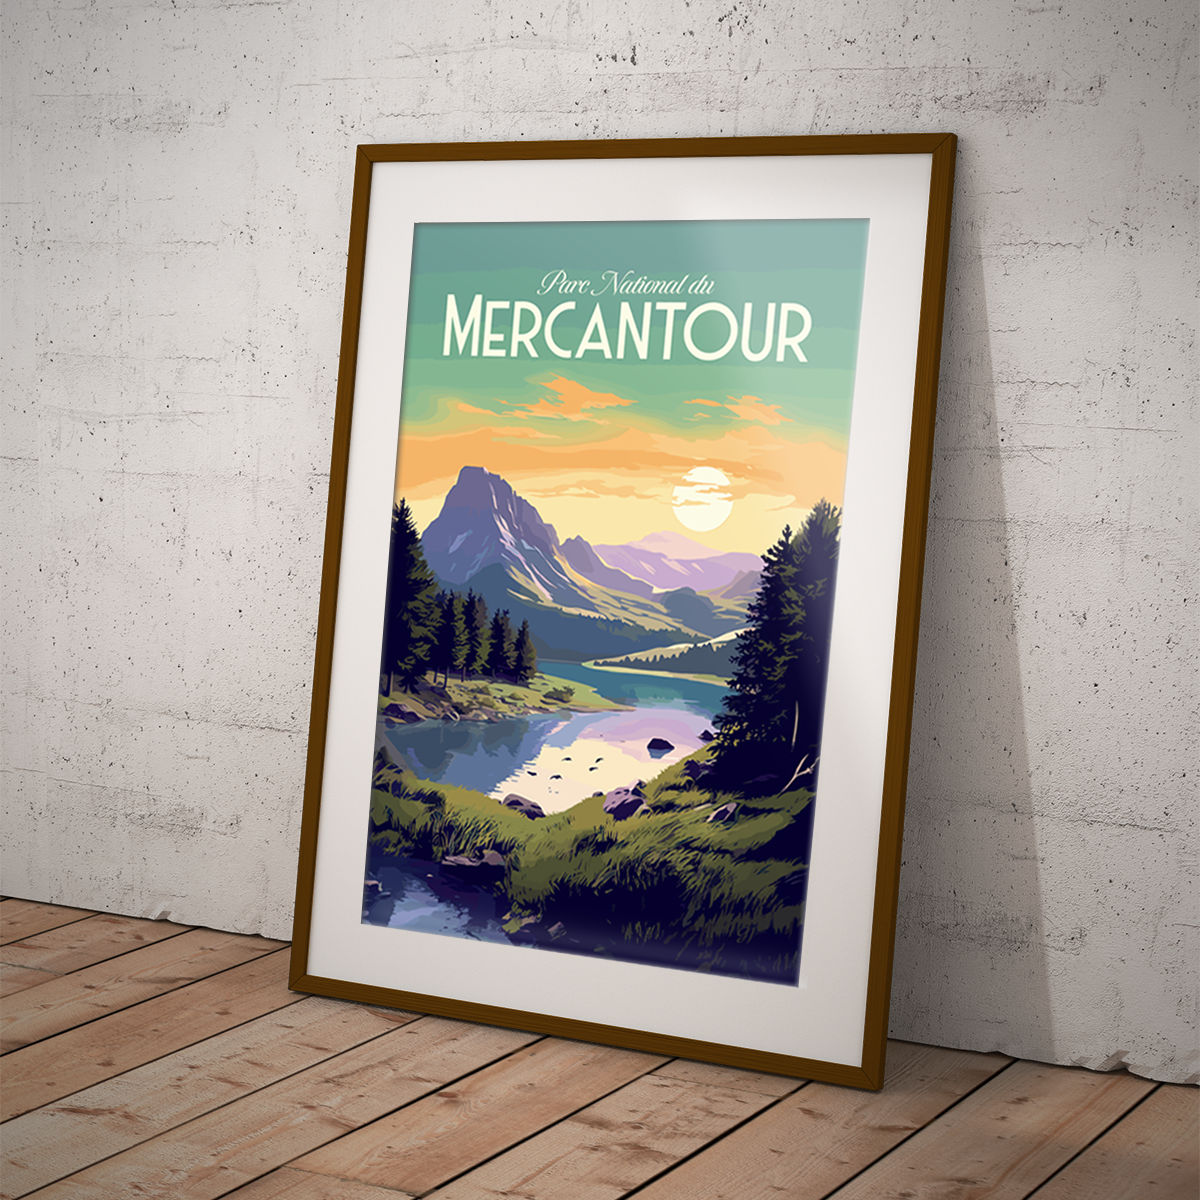 Mercantour poster by bon voyage design